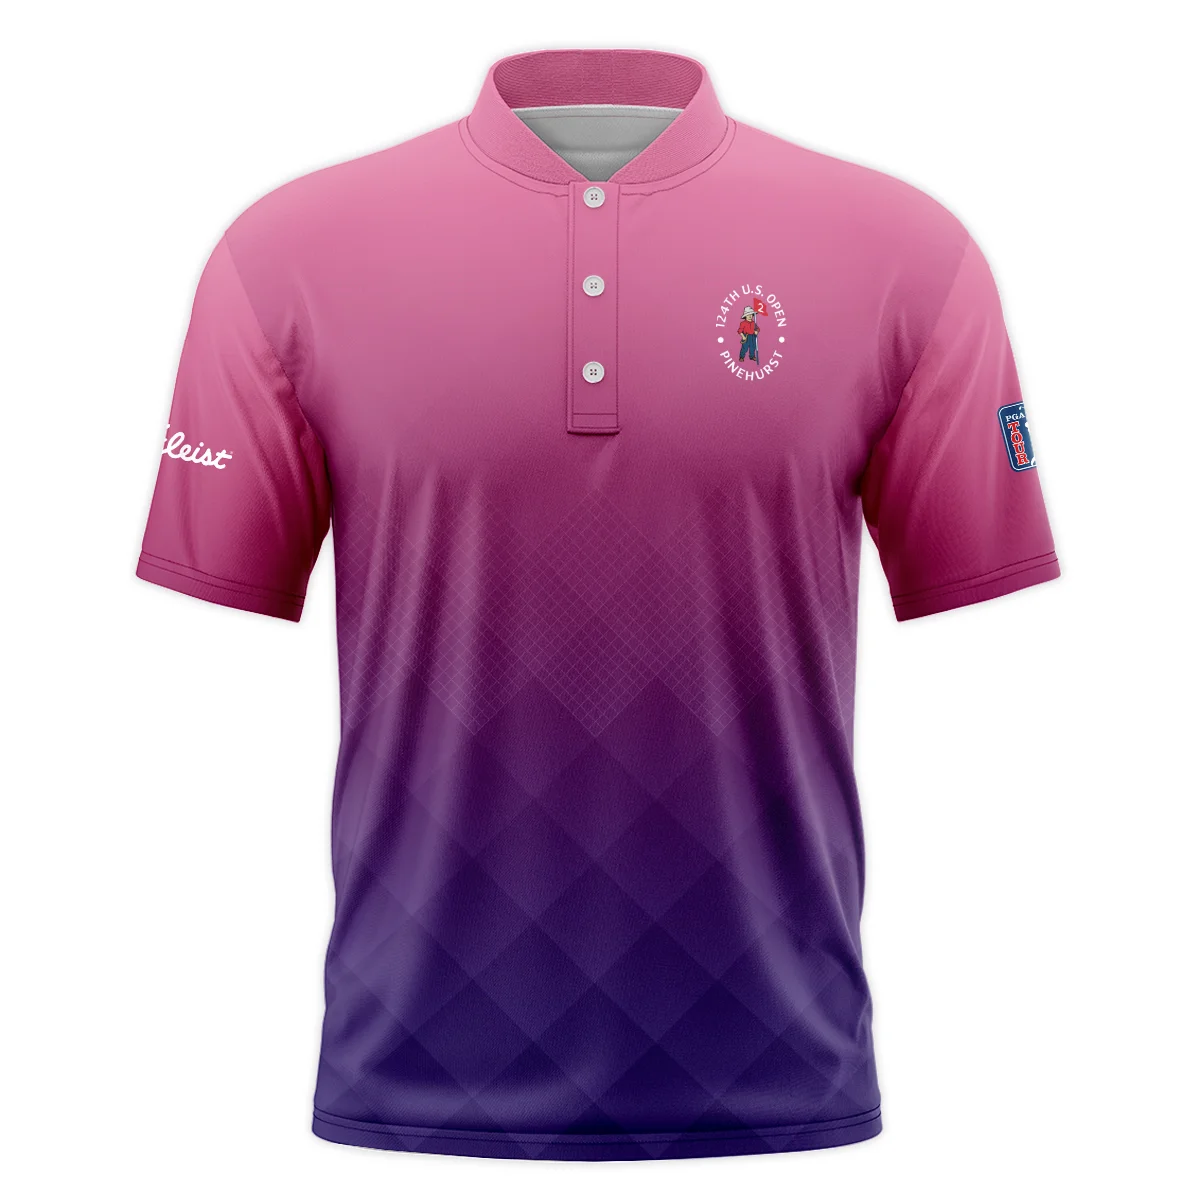 Titleist 124th U.S. Open Pinehurst Purple Pink Gradient Abstract Zipper Hoodie Shirt Style Classic